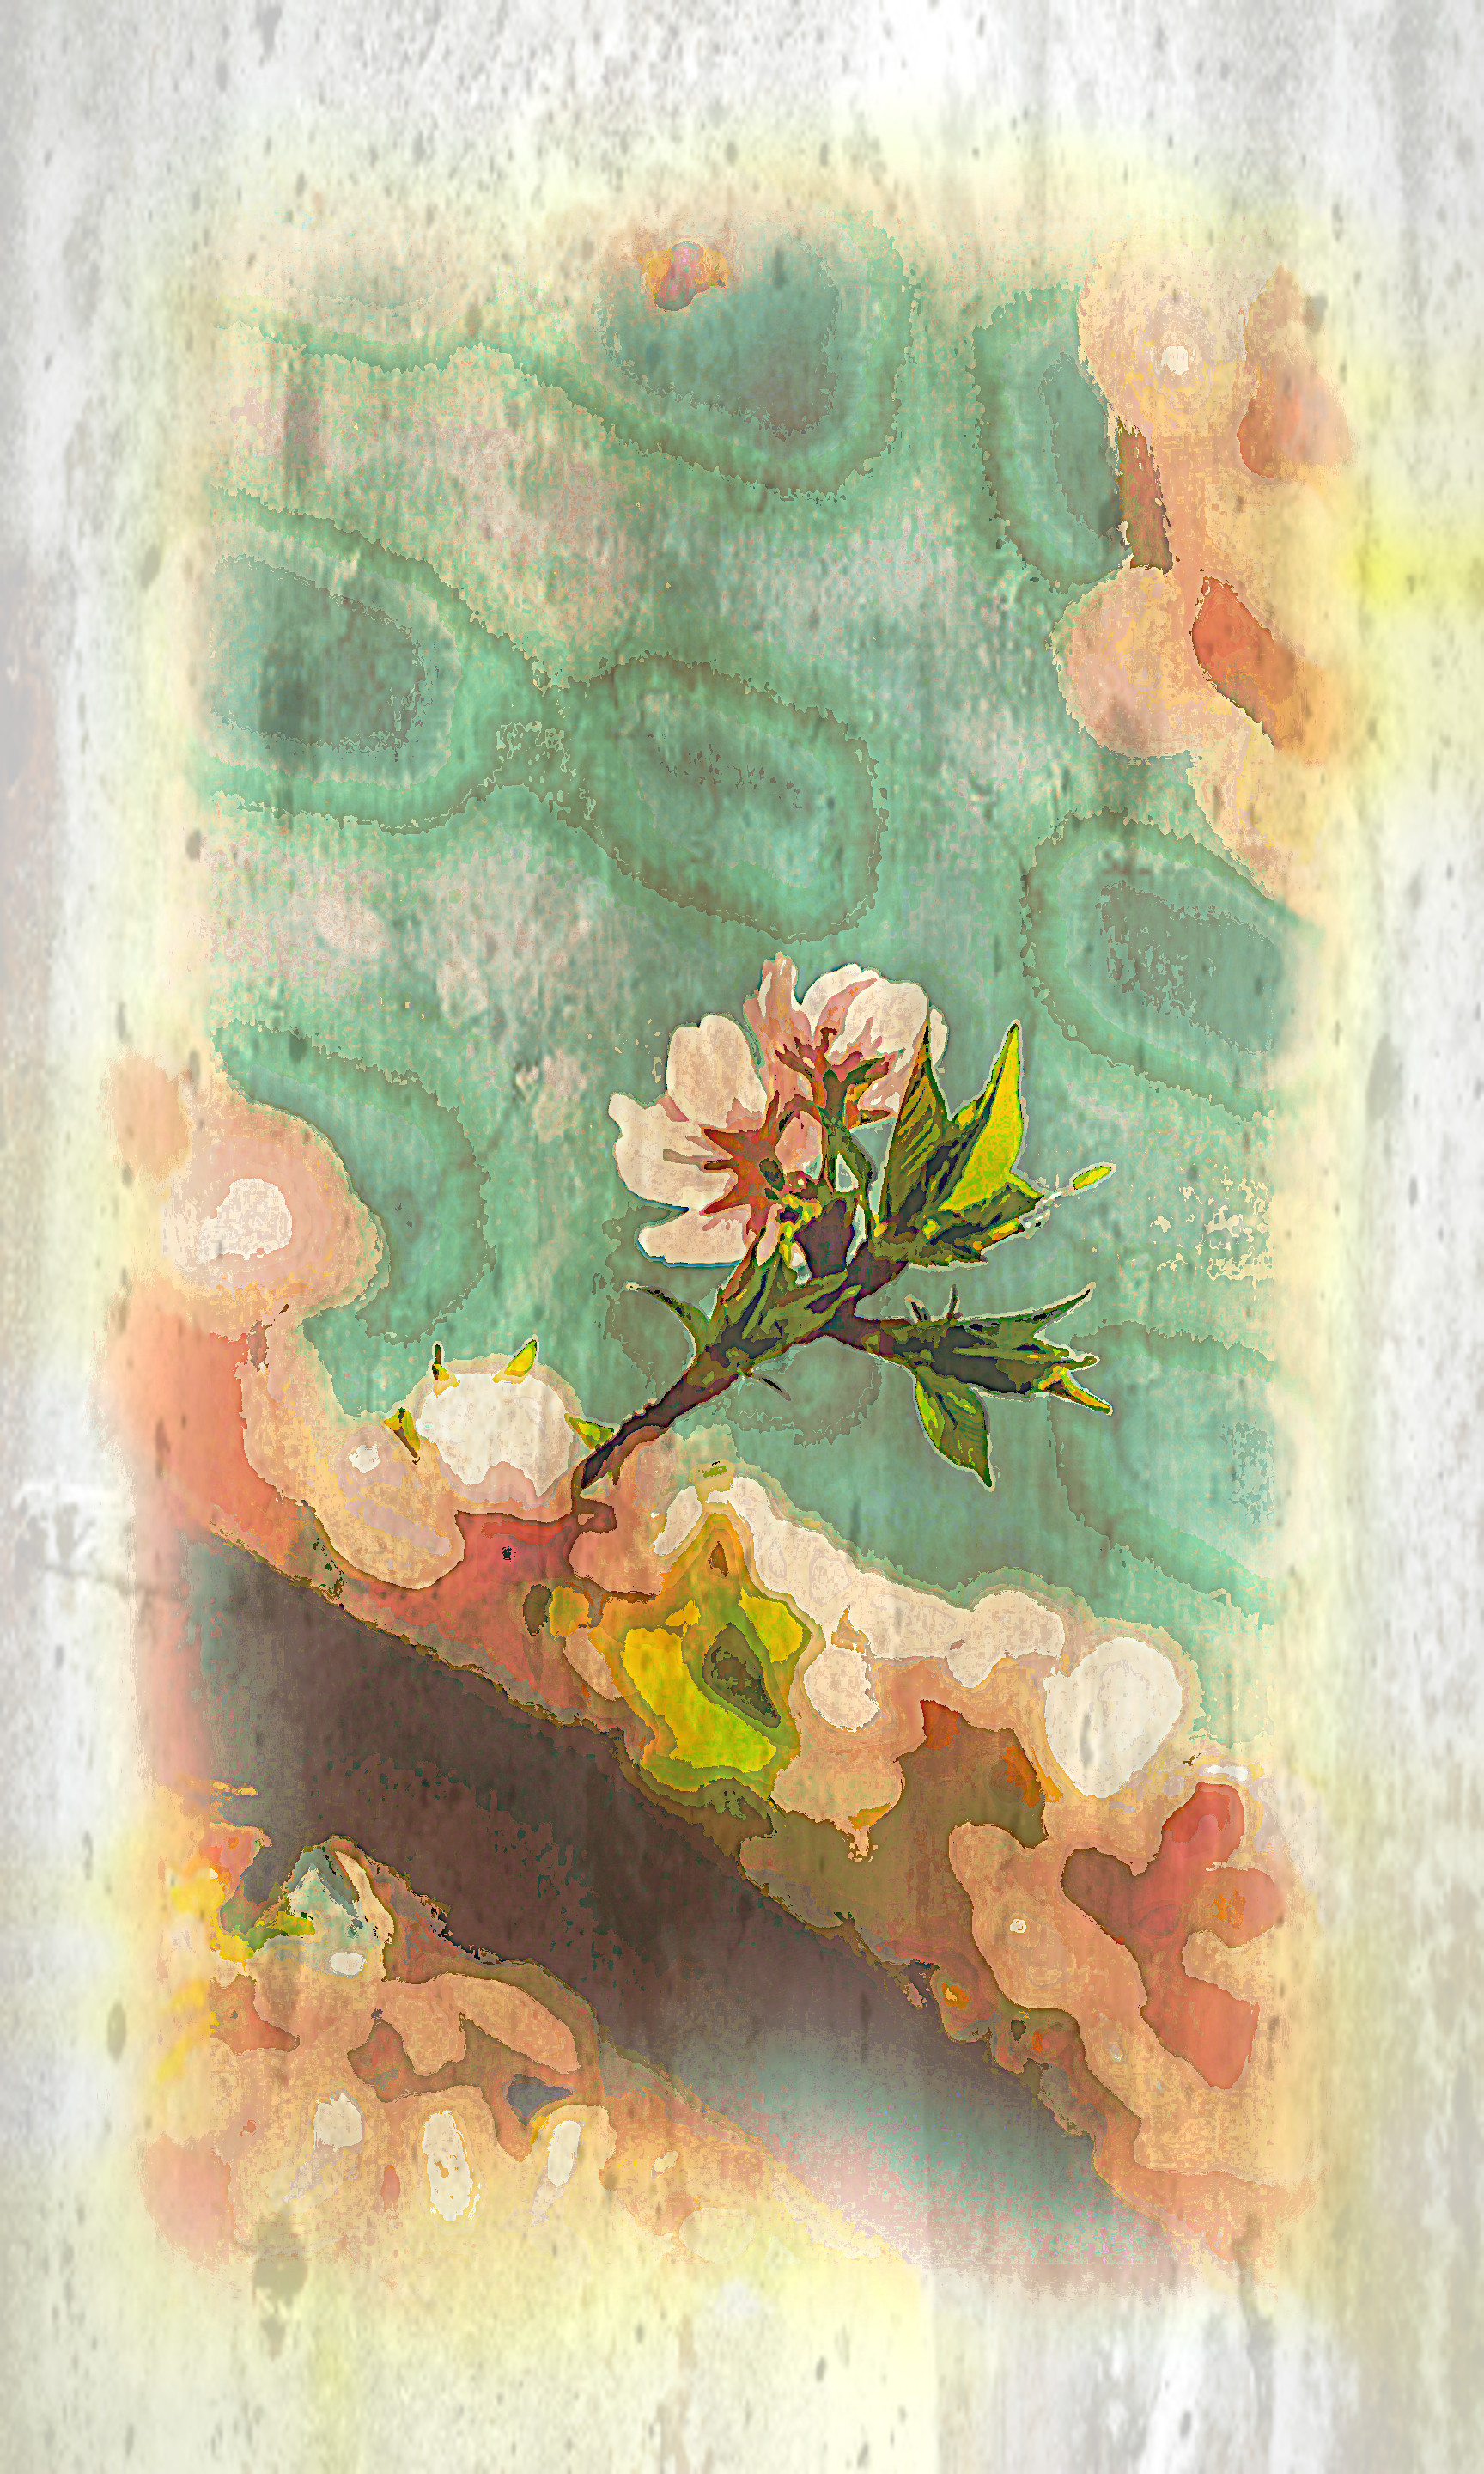 2020-04-26 06-34-48 photo-1555119837-e1576c30d60f as a digital aquarel, using18 colours, source flower, look white plus (aged).jpg